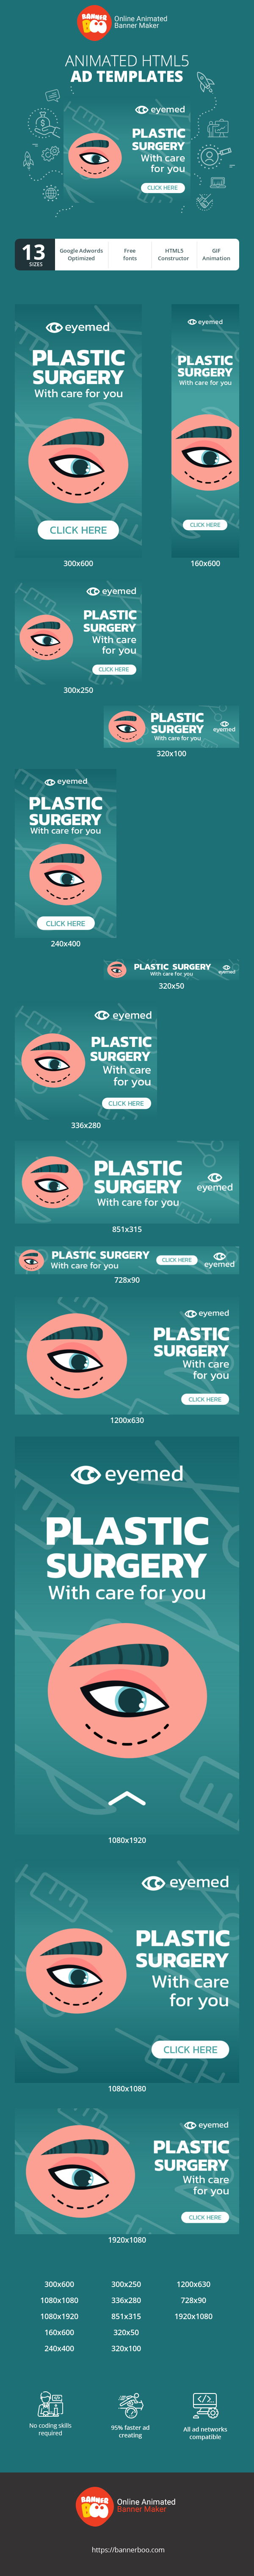 Шаблон рекламного банера — Plastic Surgery — With care for you